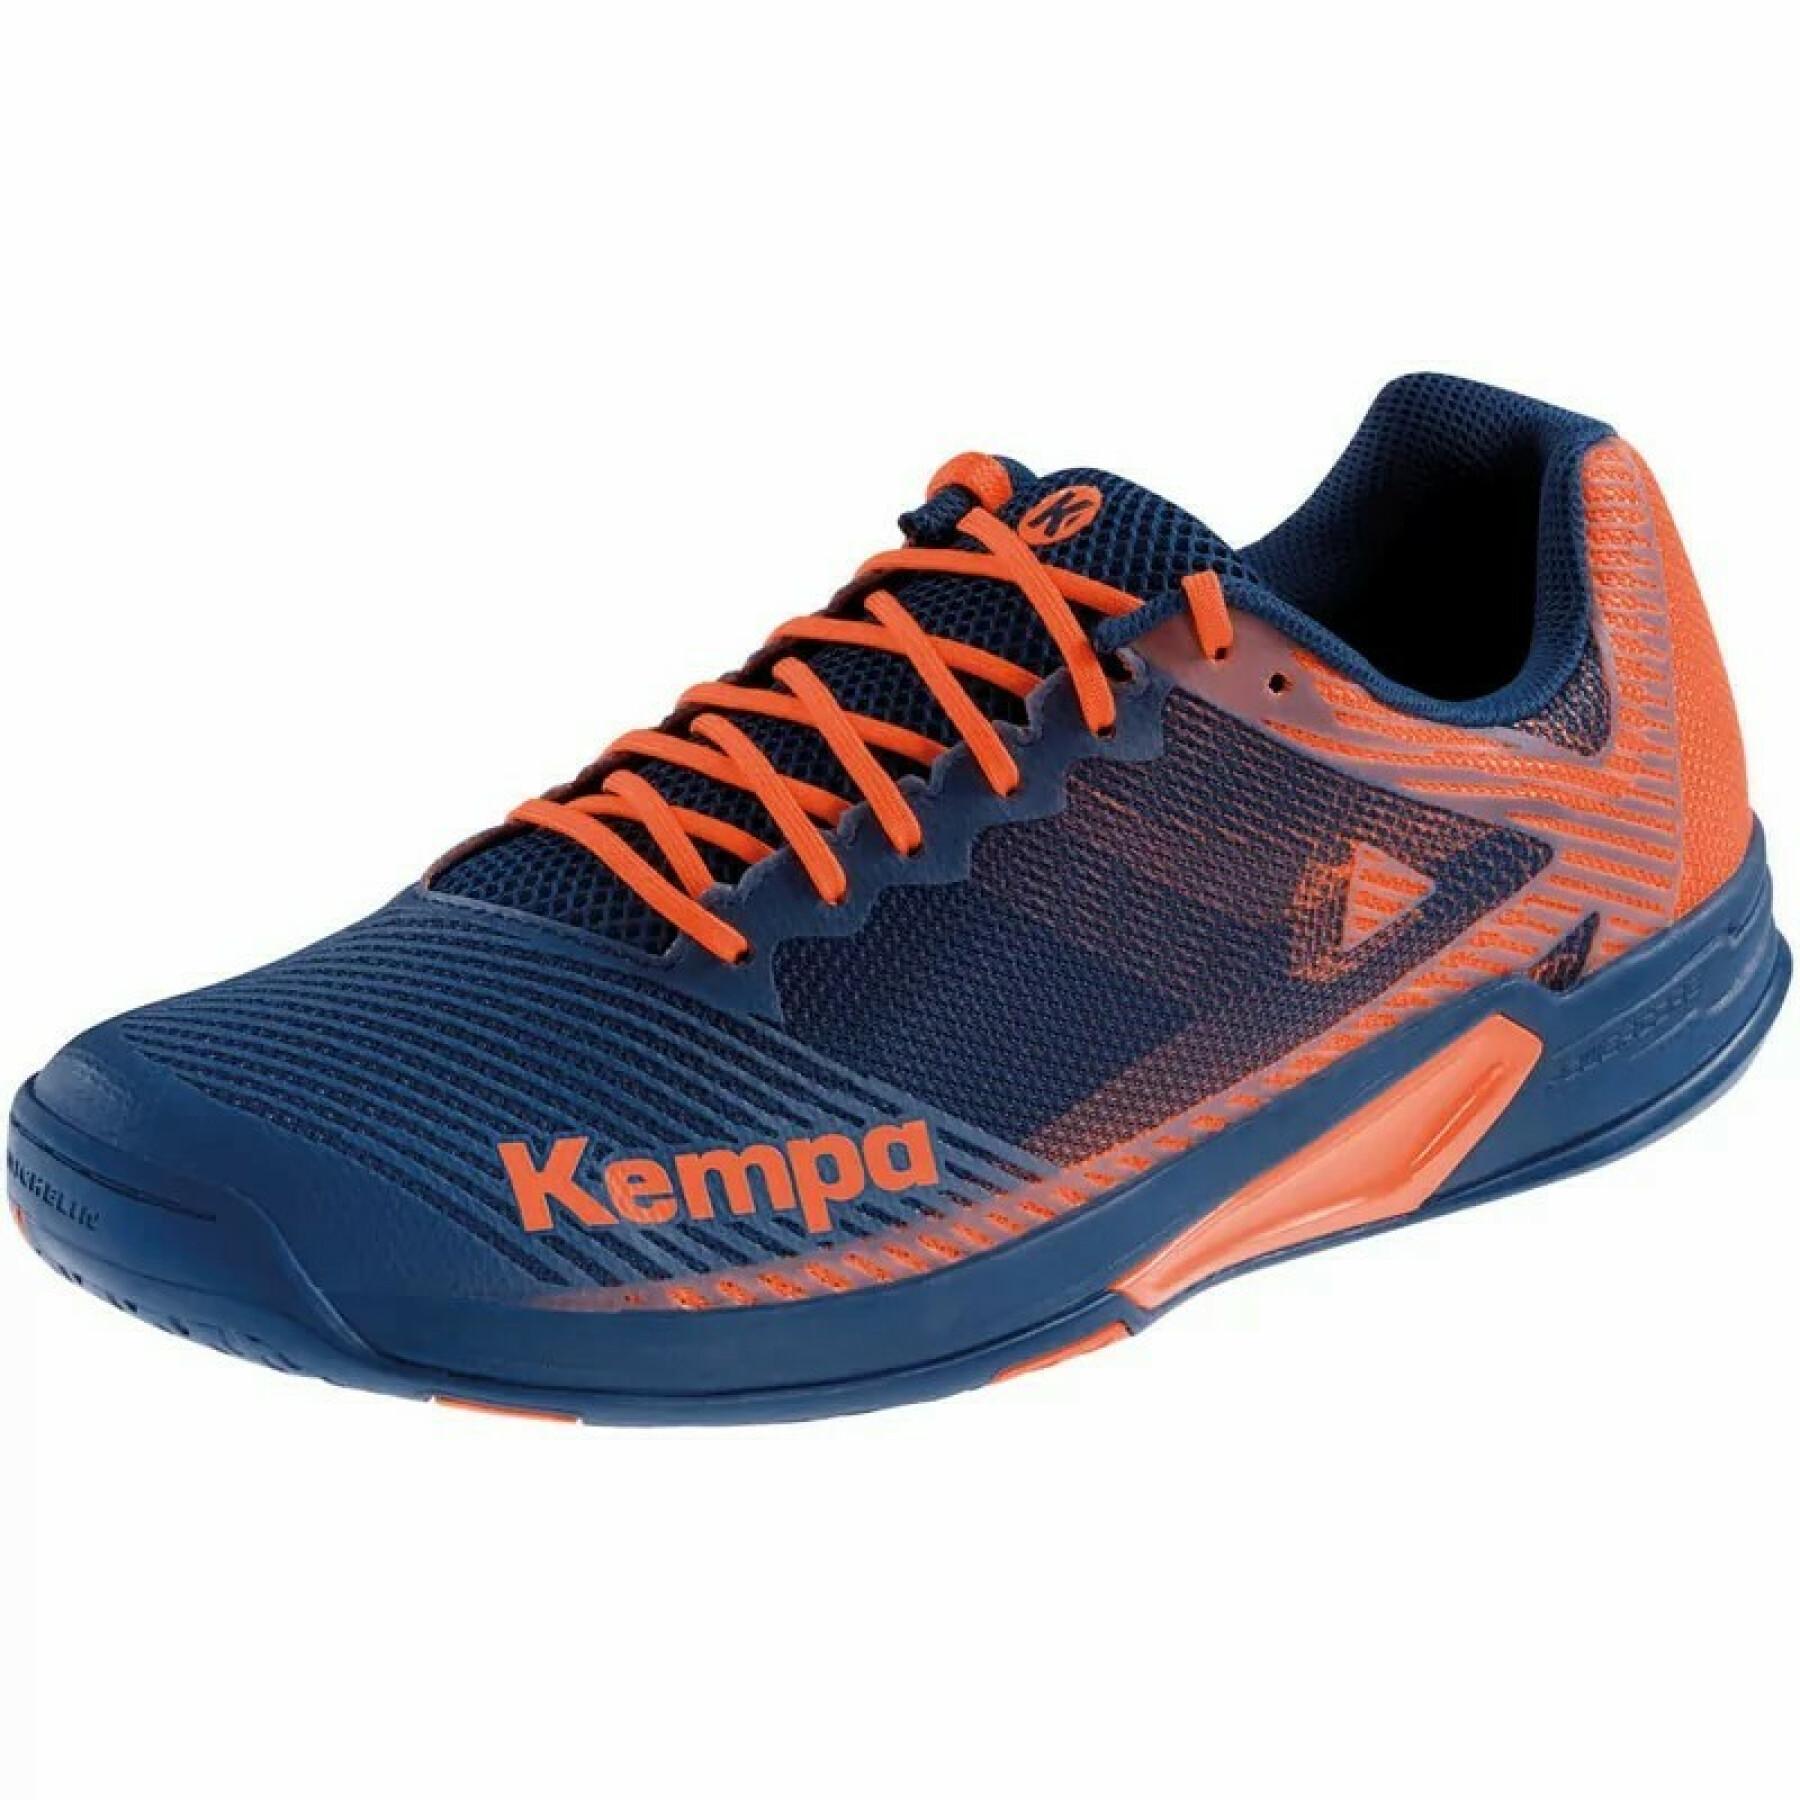 Kempa Wing 2.0 Indoor Shoes Handball 200854002 